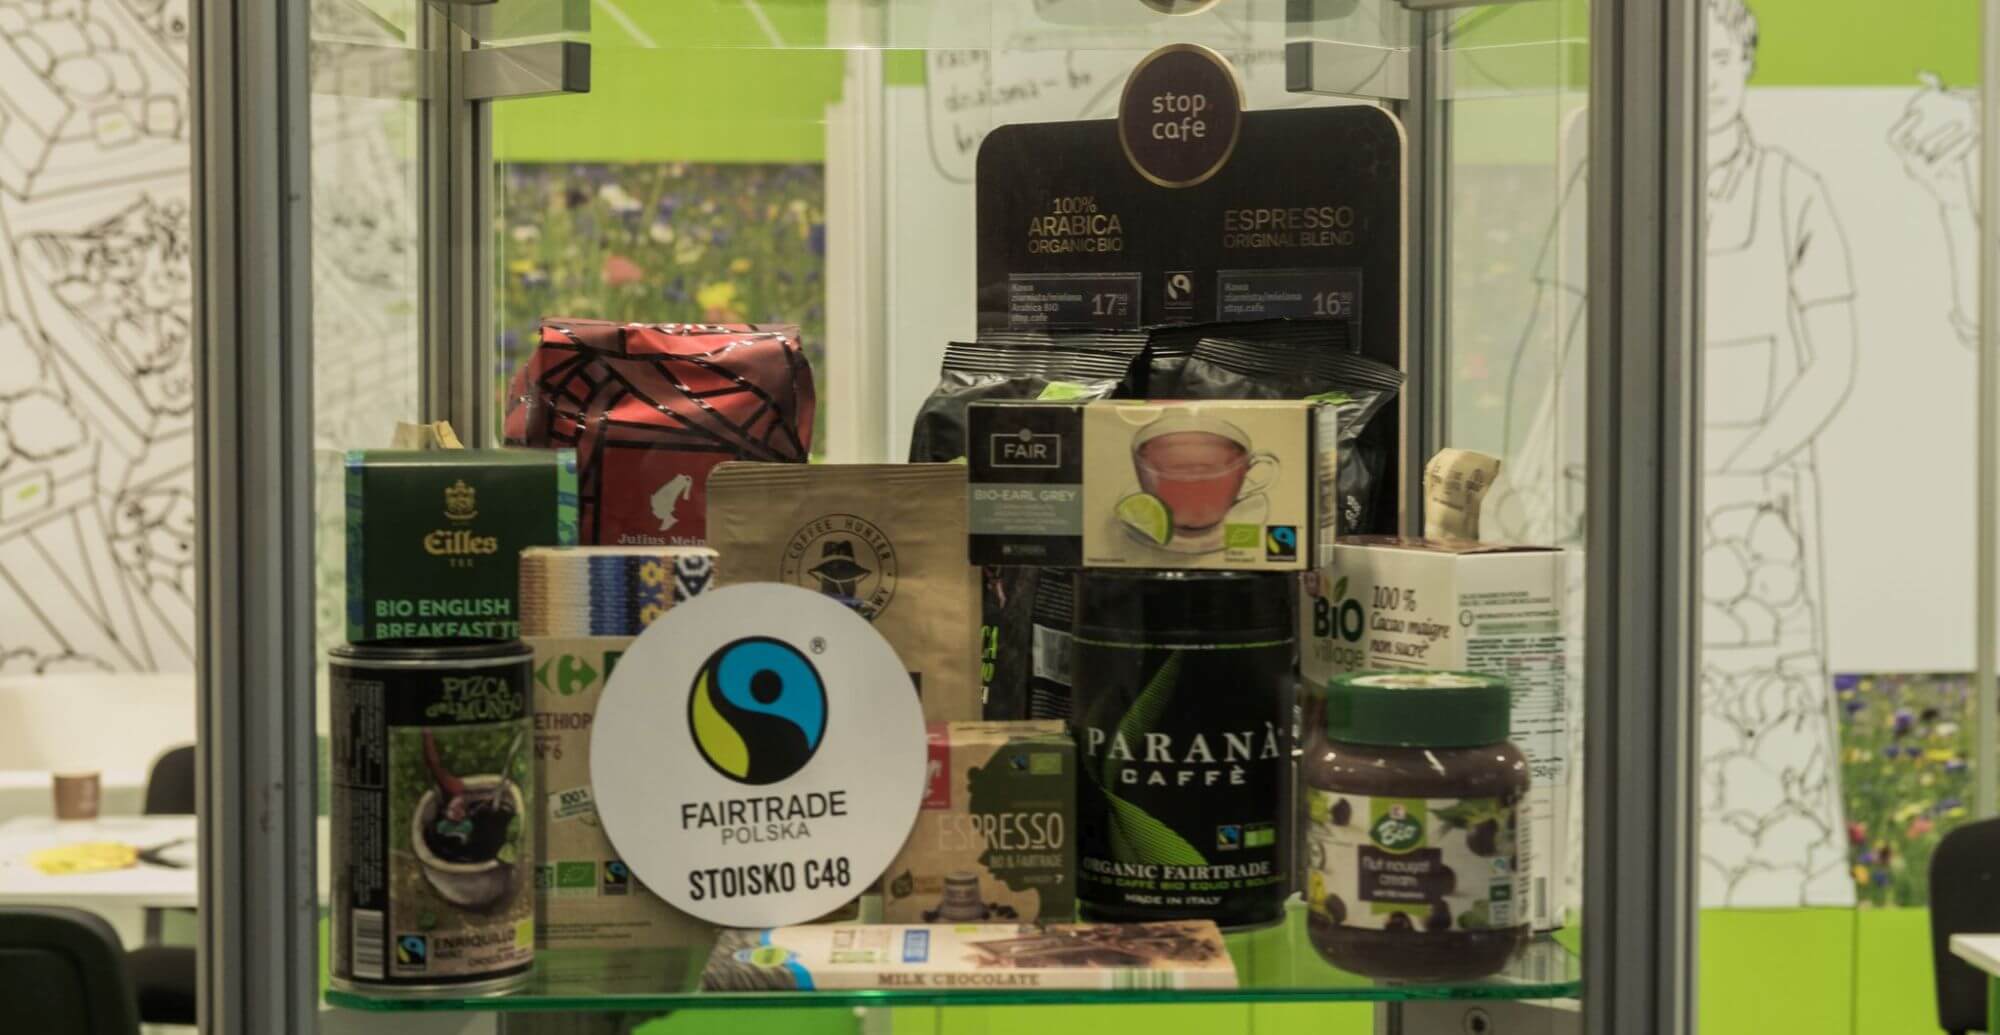 Produkty Fairtrade, E.Leclerc, nowosciproduktowe.pl